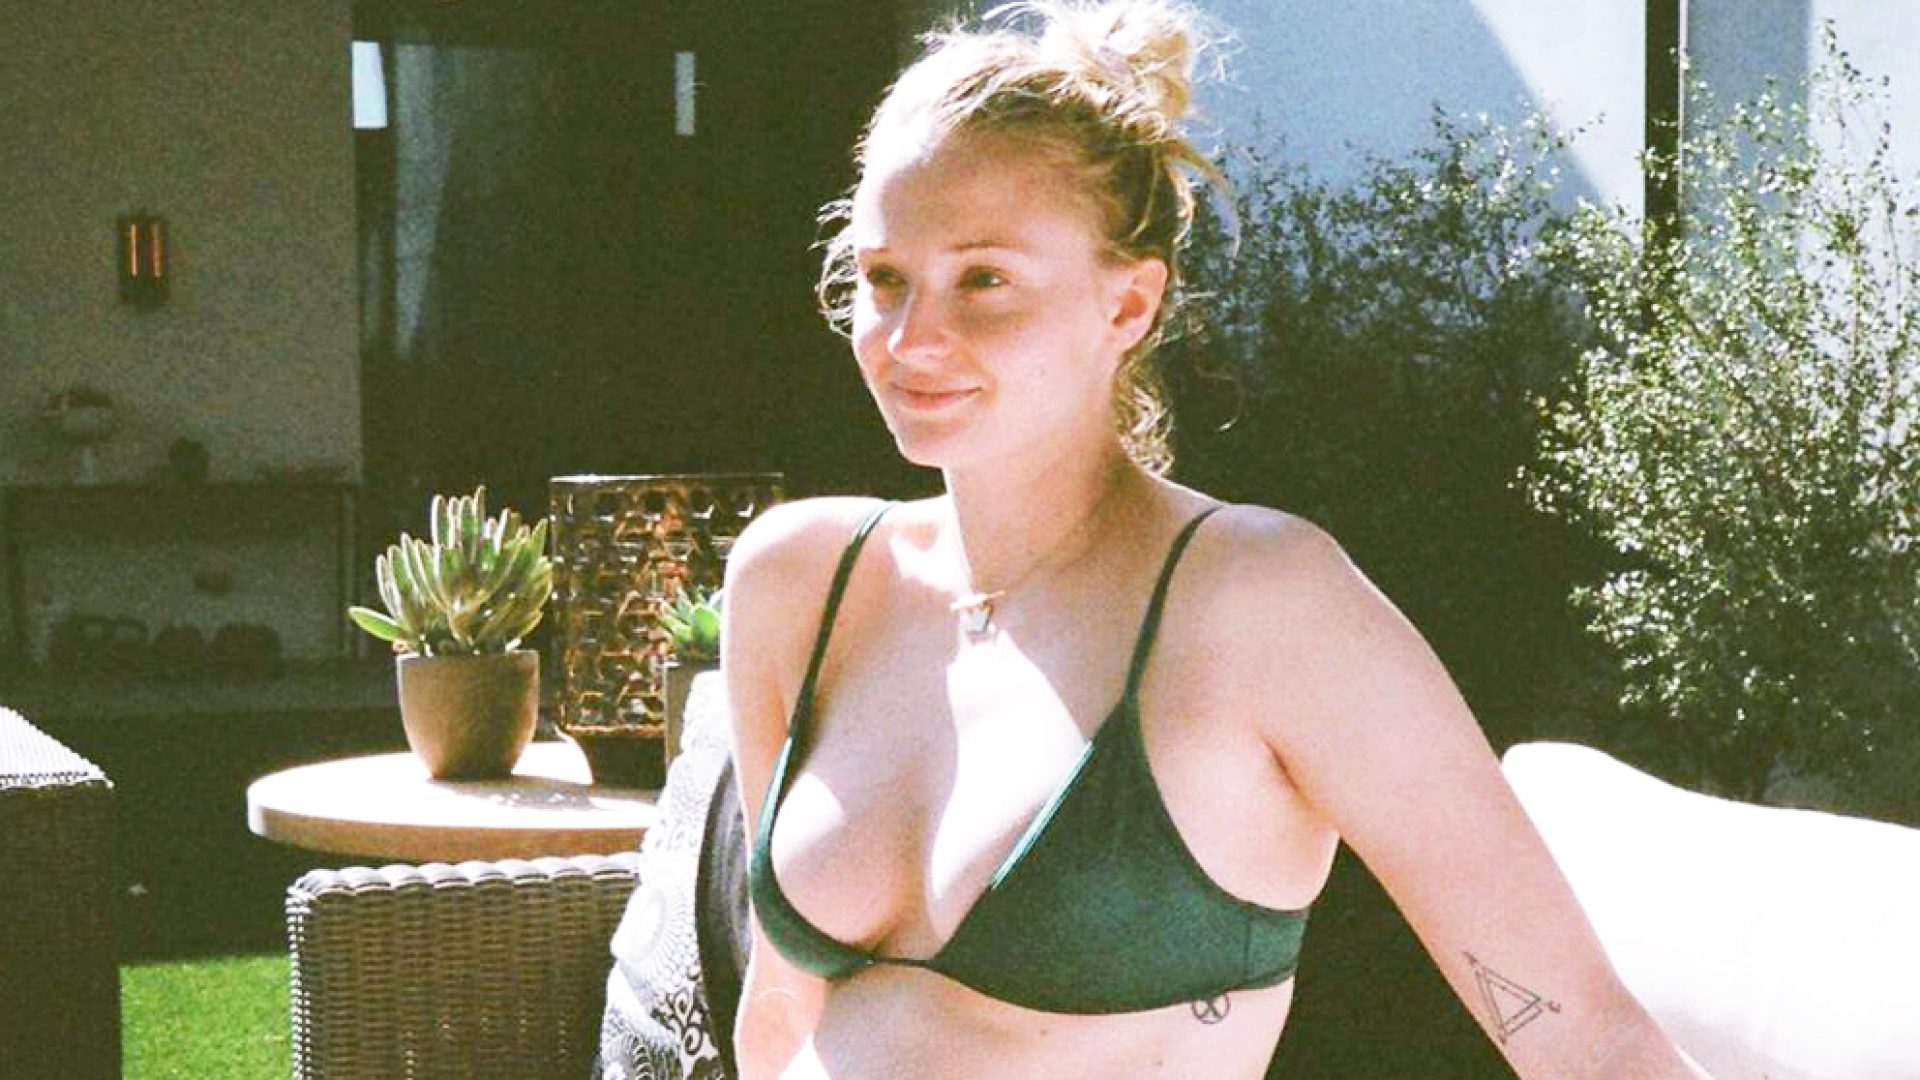 christine tosti share sophie turner in a bikini photos